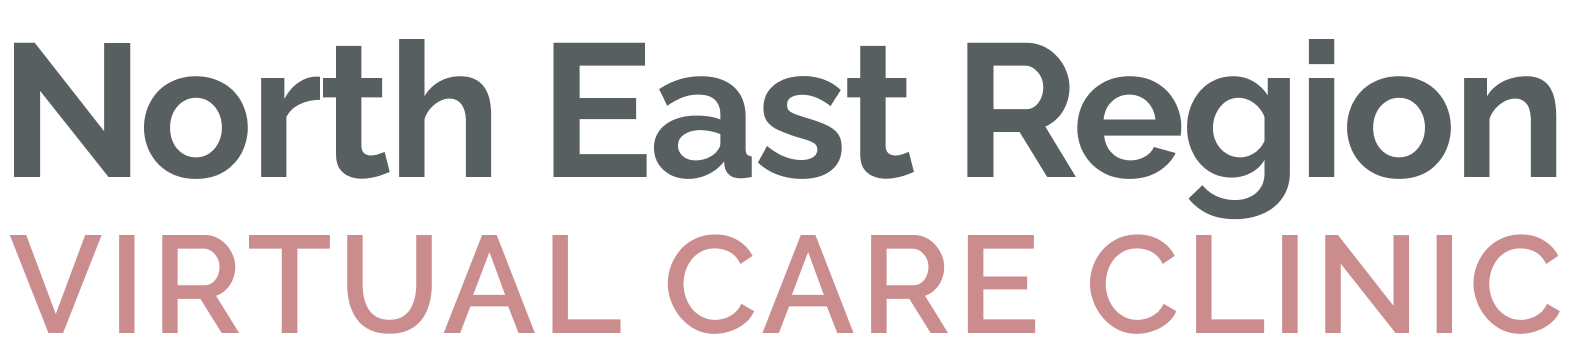 ERVCC logo